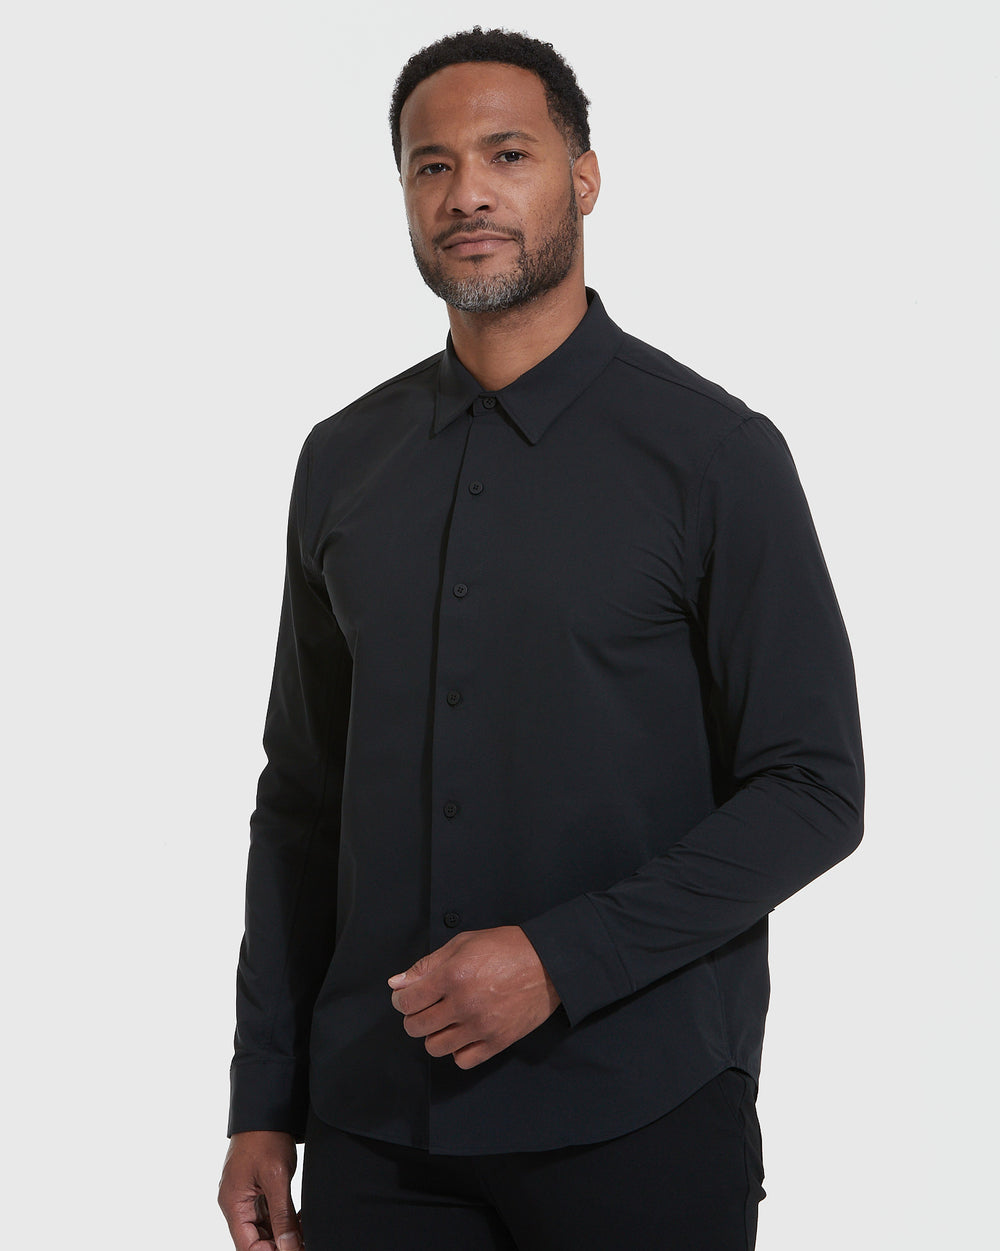 Seamless BH - black, Tops/Shirts, Basics